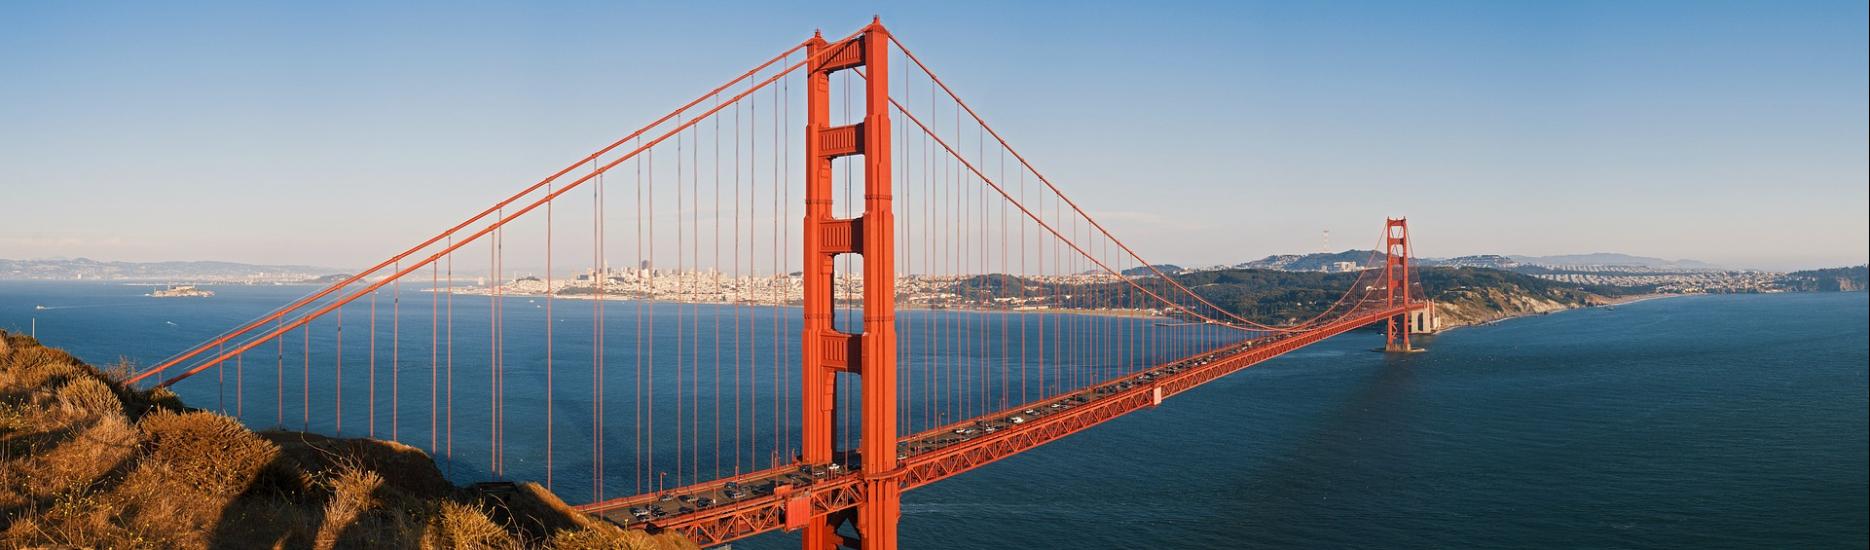 San Francisco, USA, Golden Gate Bridge